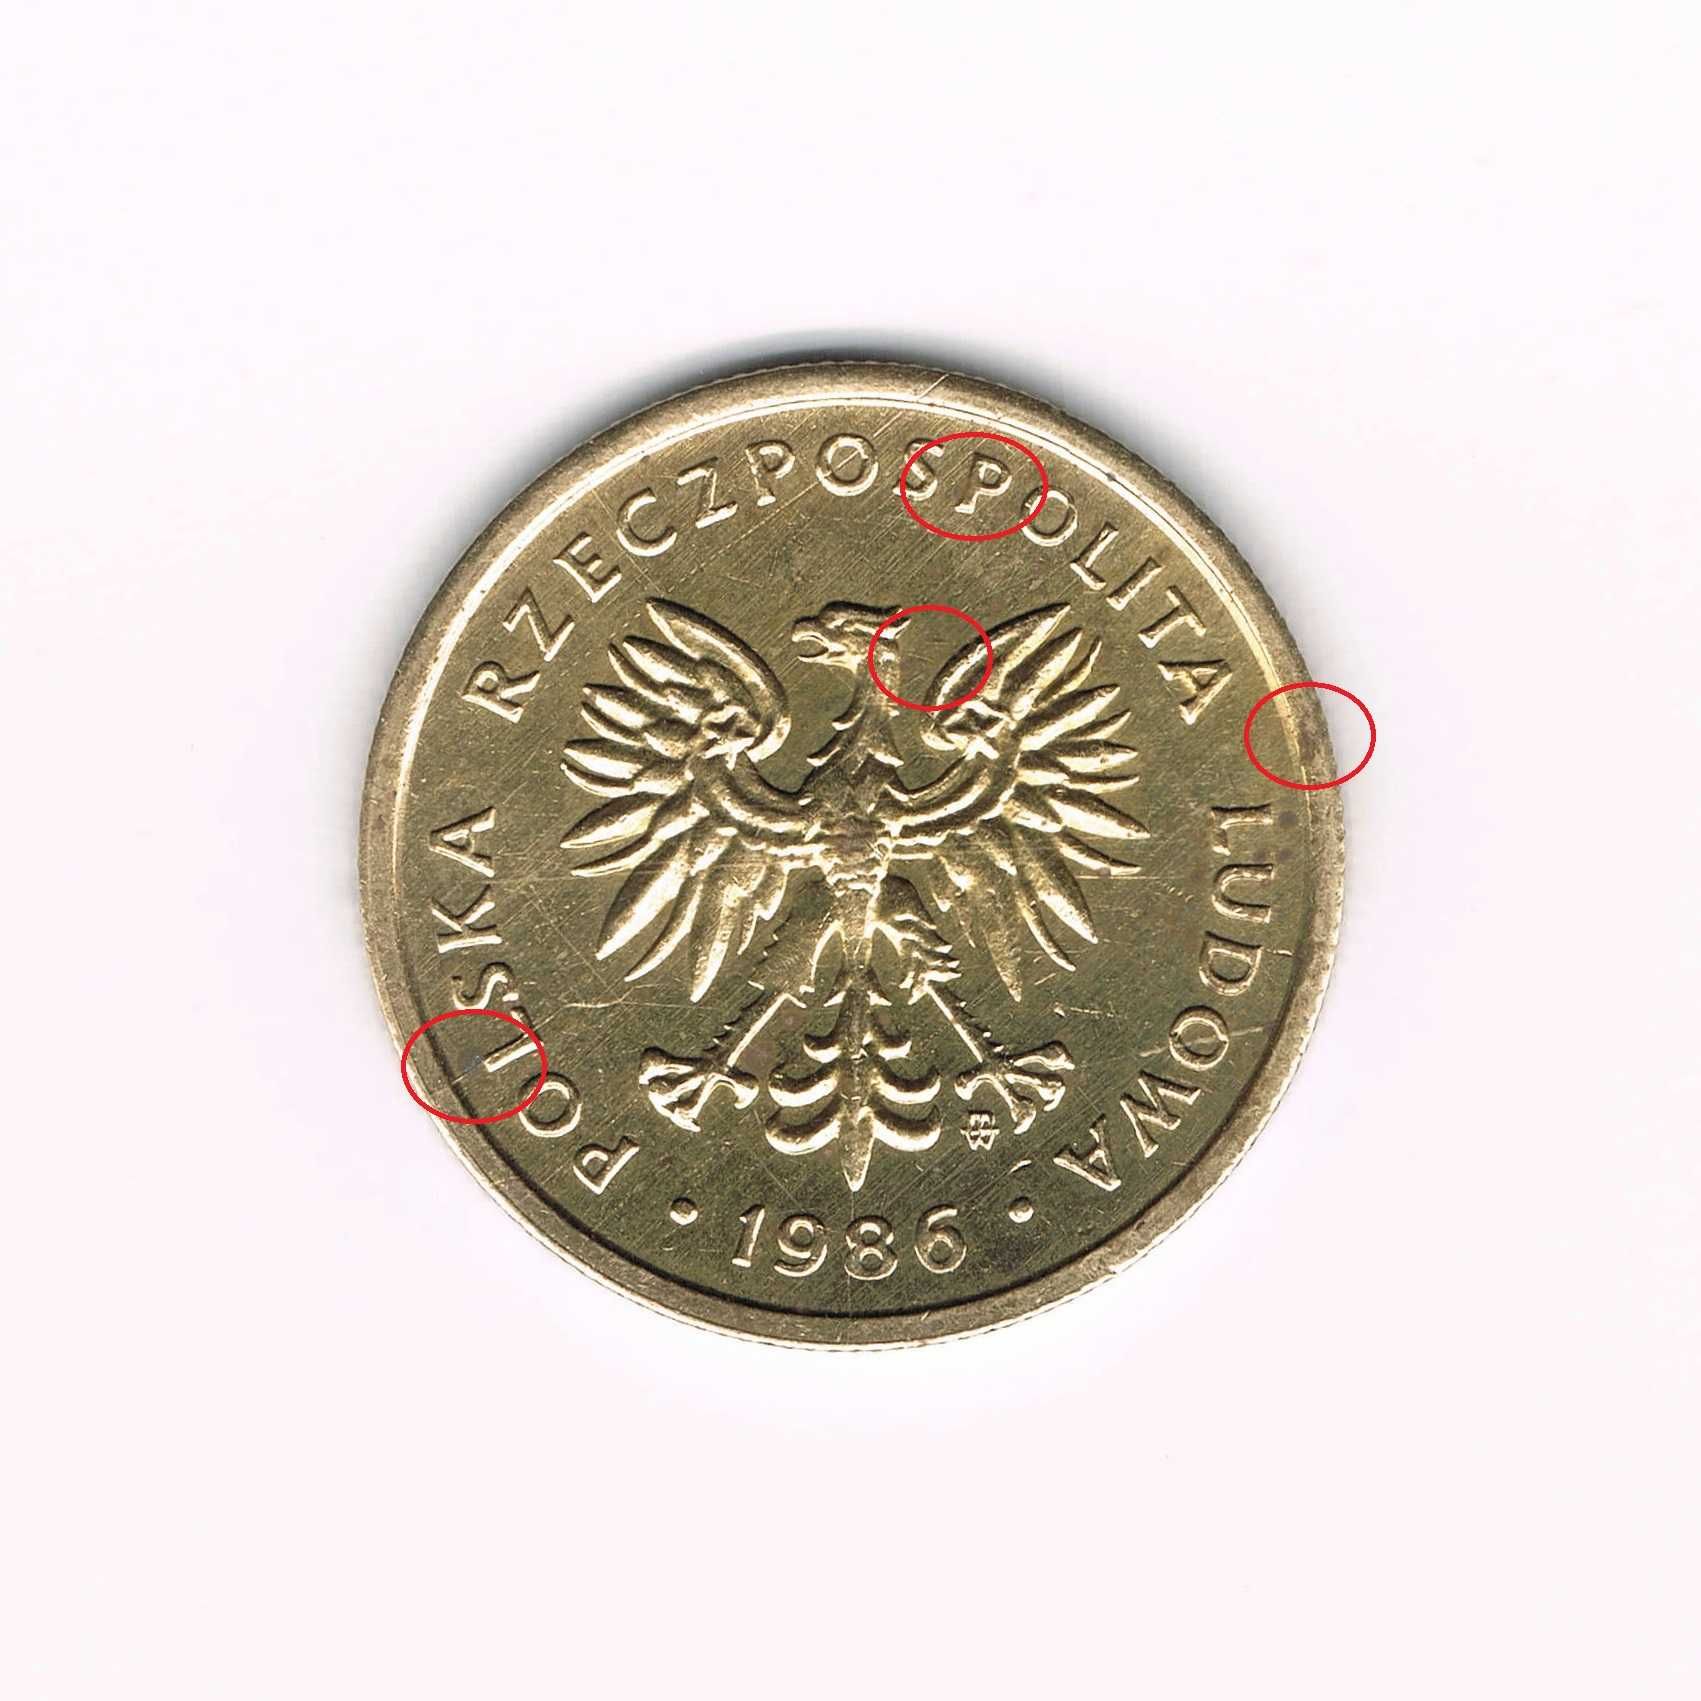 Moneta PRL - 2 zł - 1986 rok